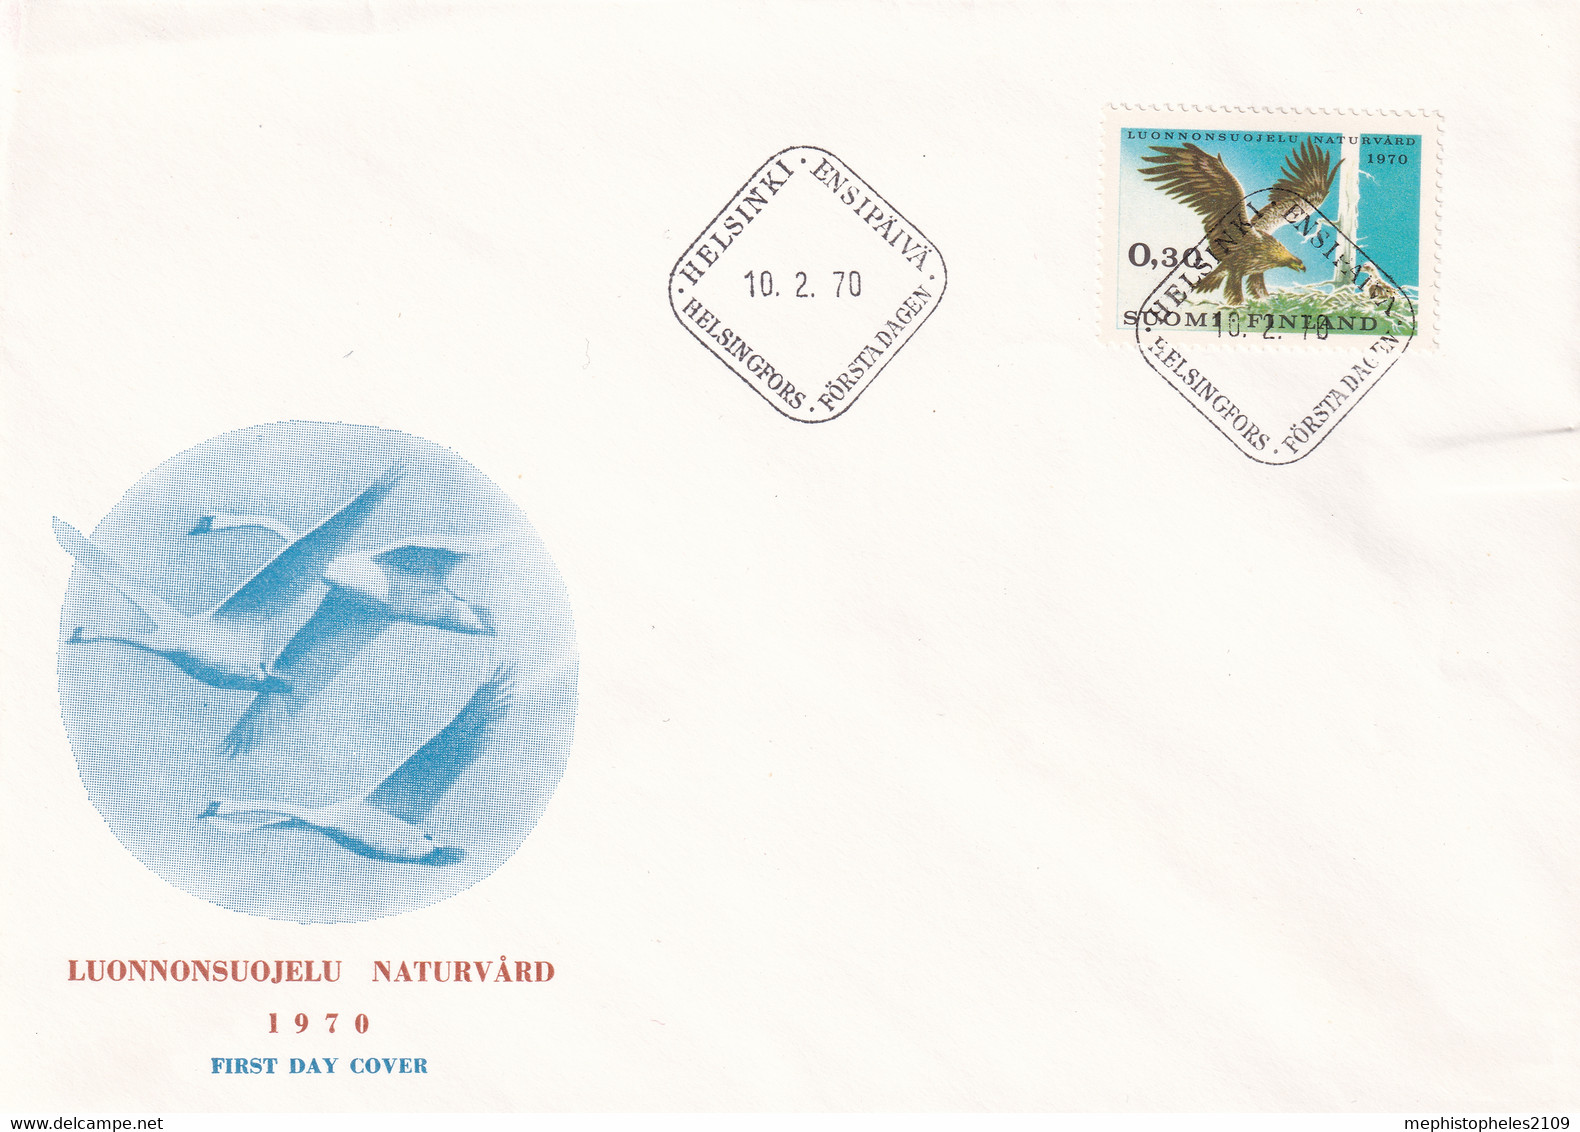 FINLAND 1970 - FDC - Mi 667 - Luonnonsuojelu Naturvard - Used Stamps